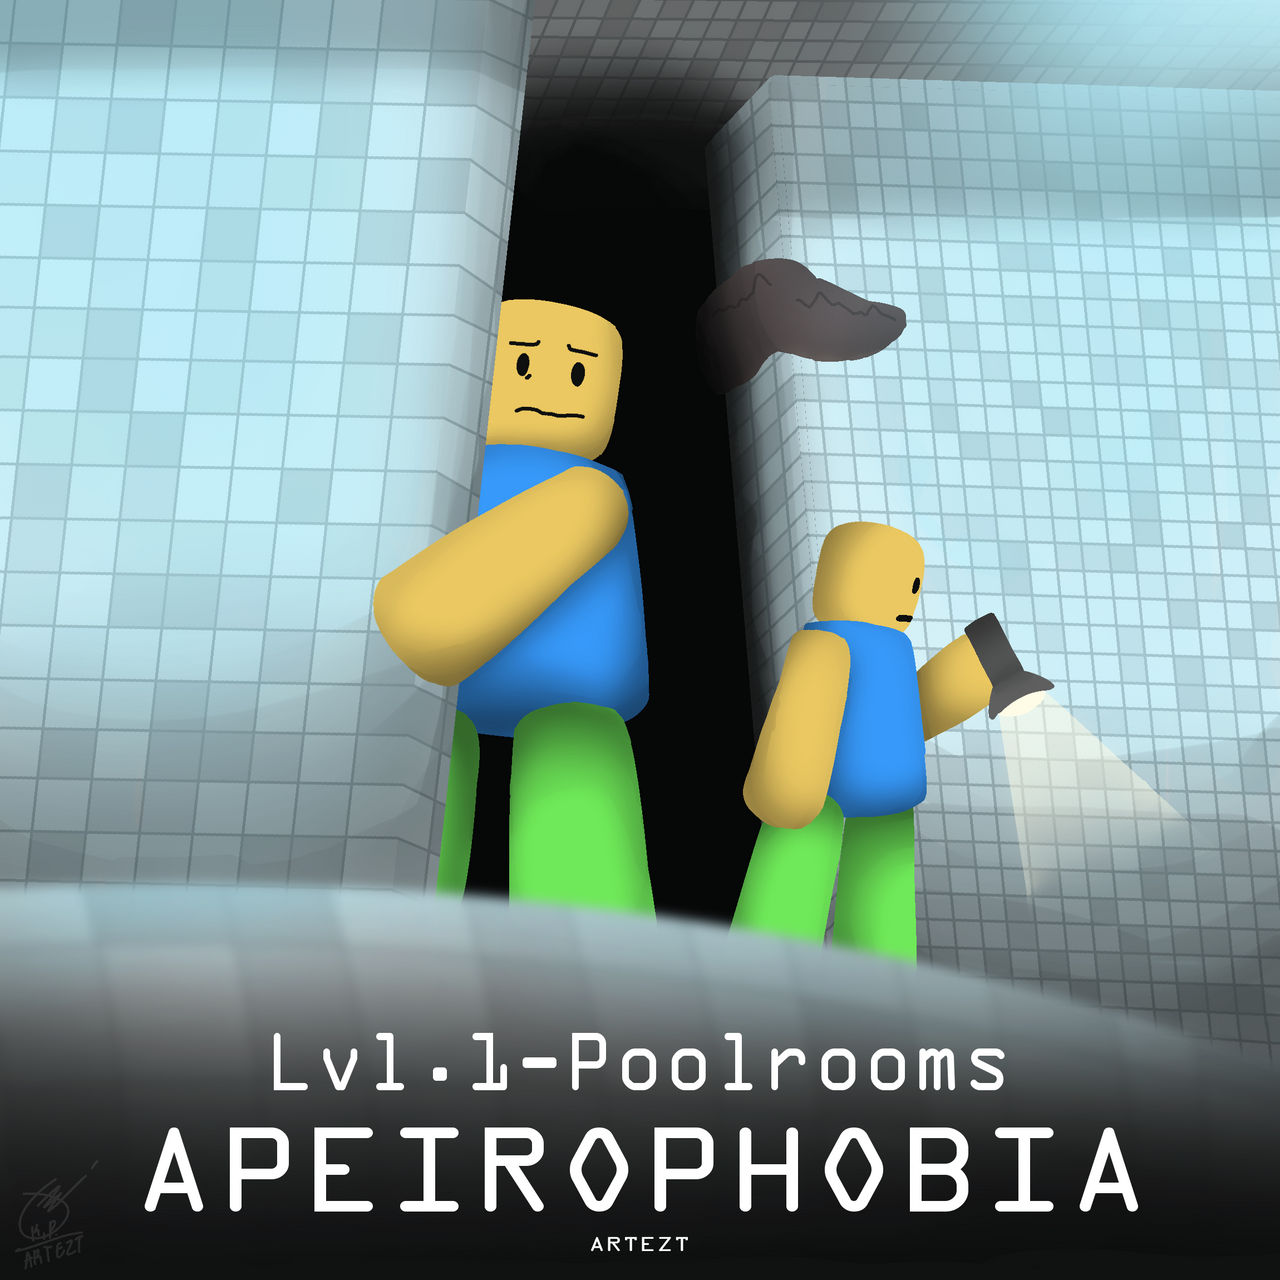 Backrooms - Apeirofobia by melobunny223456 on DeviantArt